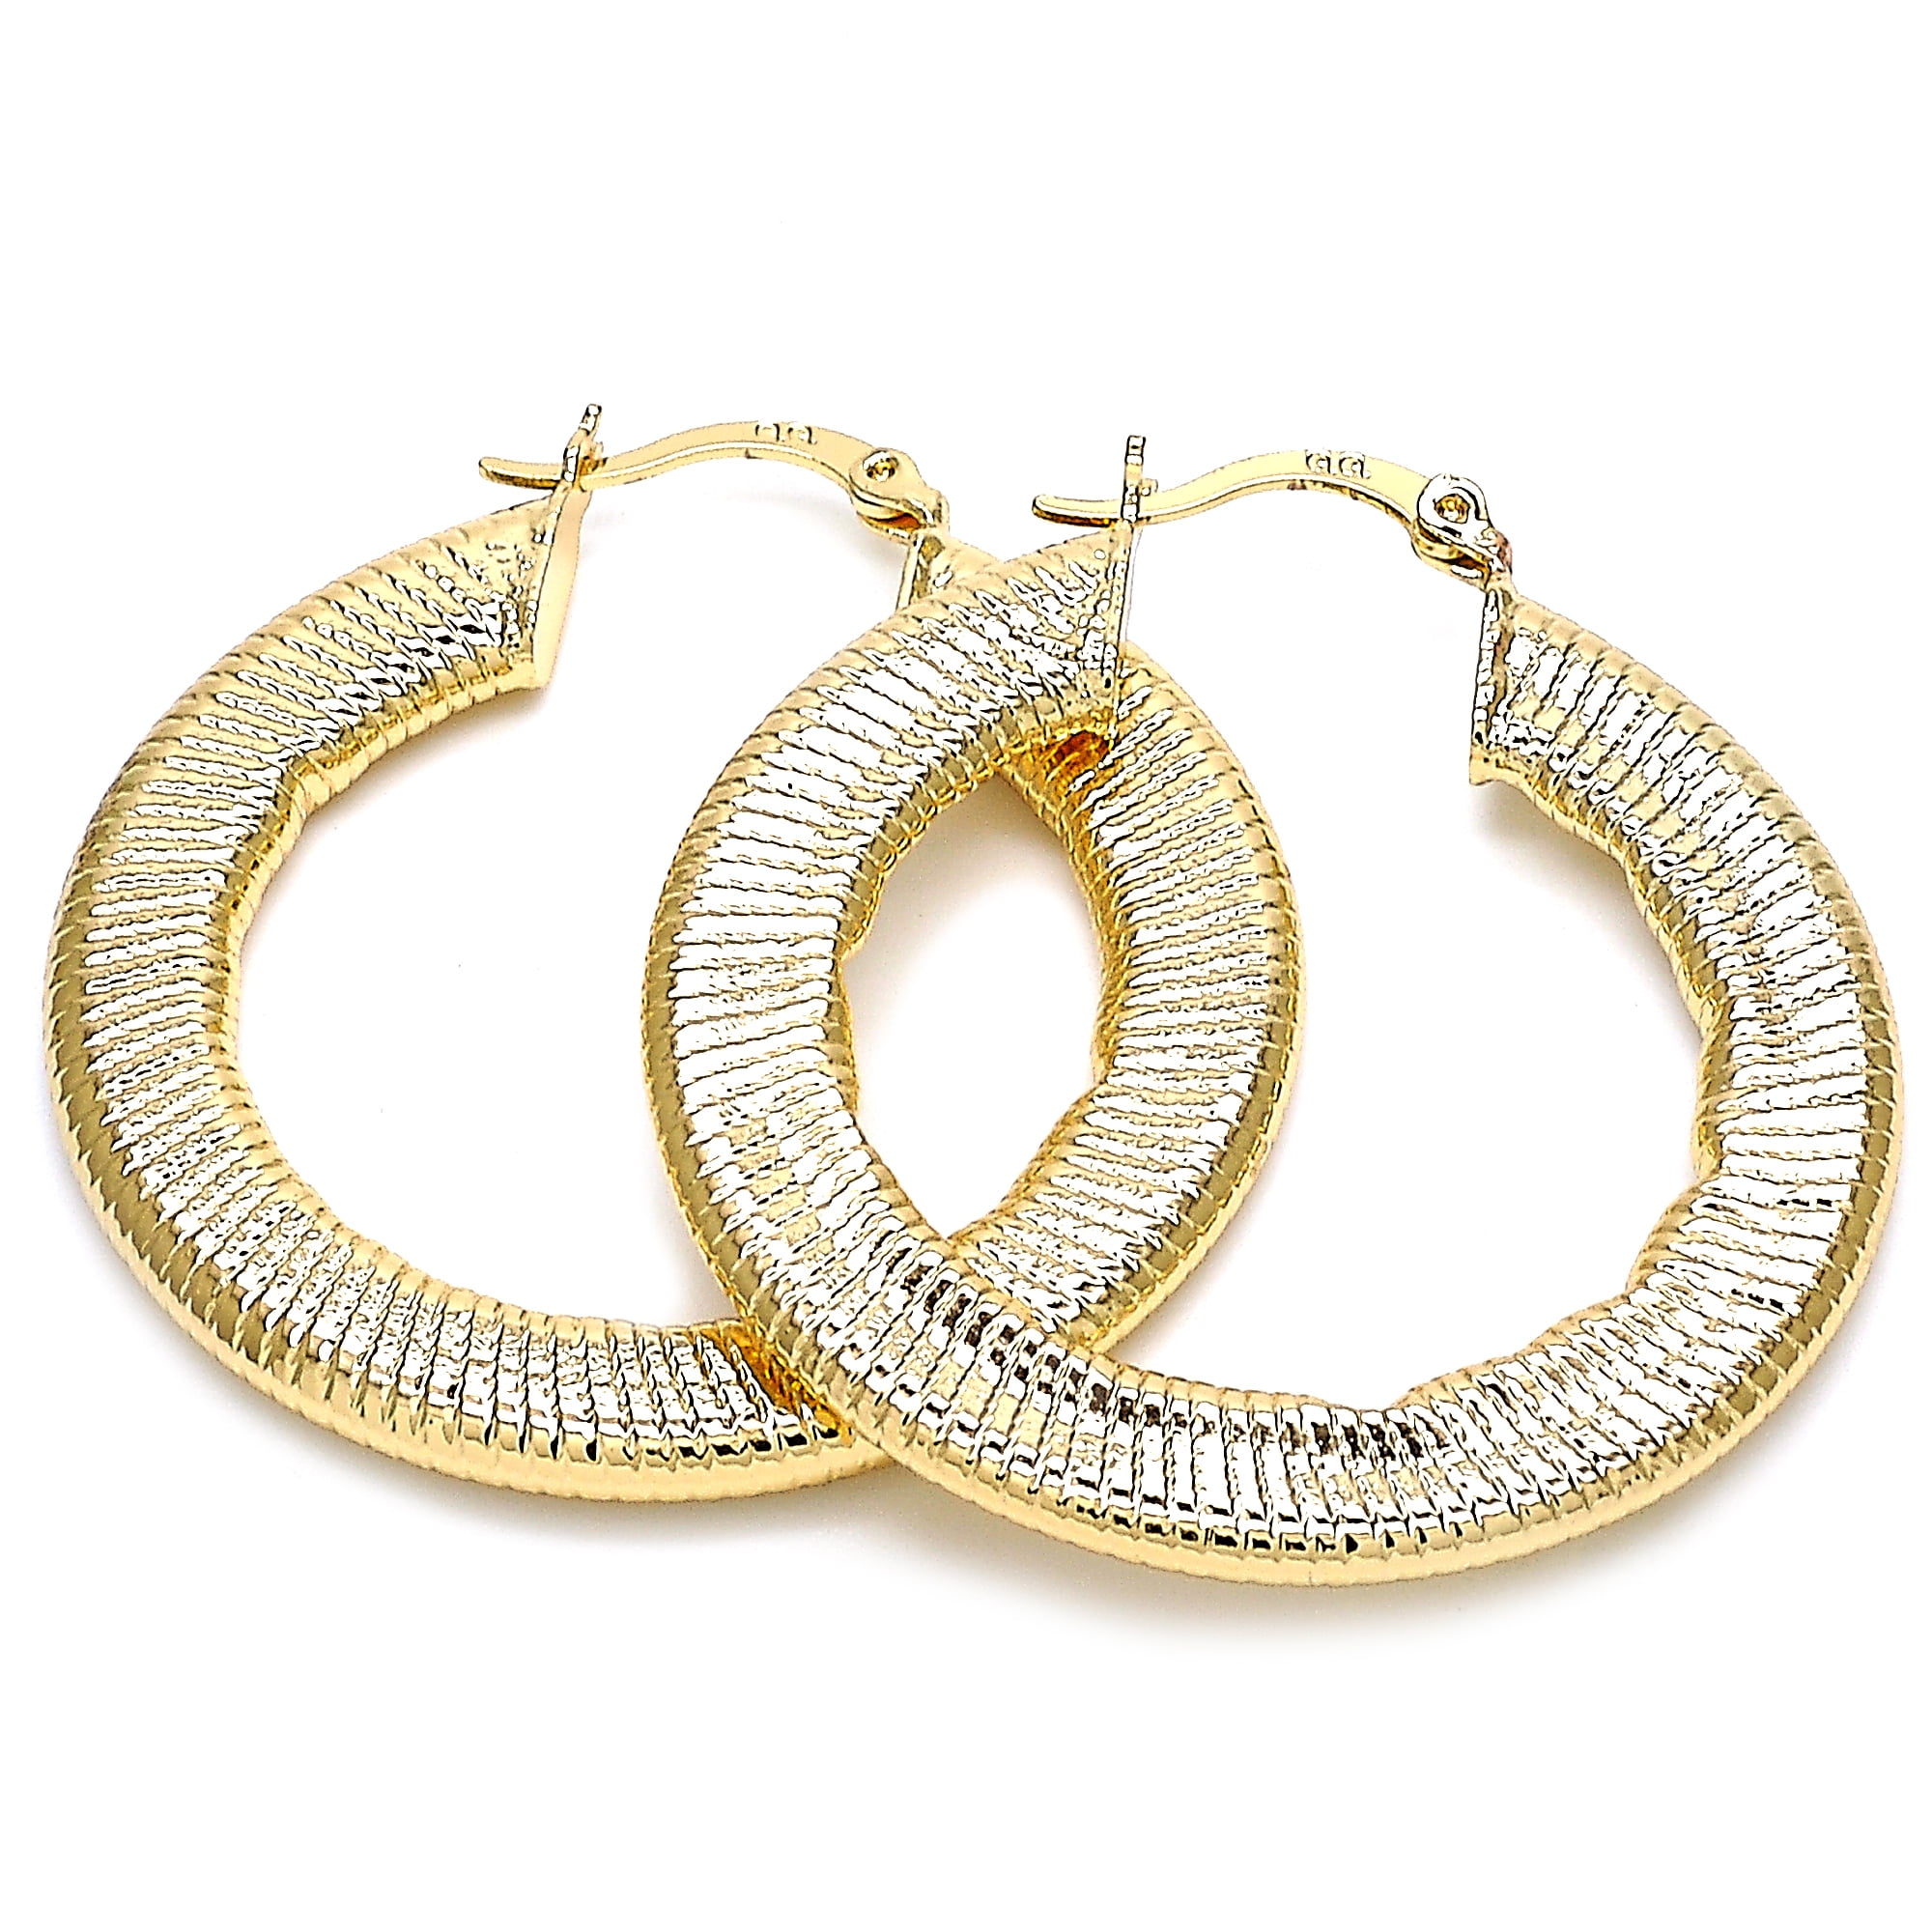 Clear Quartz Spike Hoop Earrings in Gold Fill Rose Gold Fill or Silver